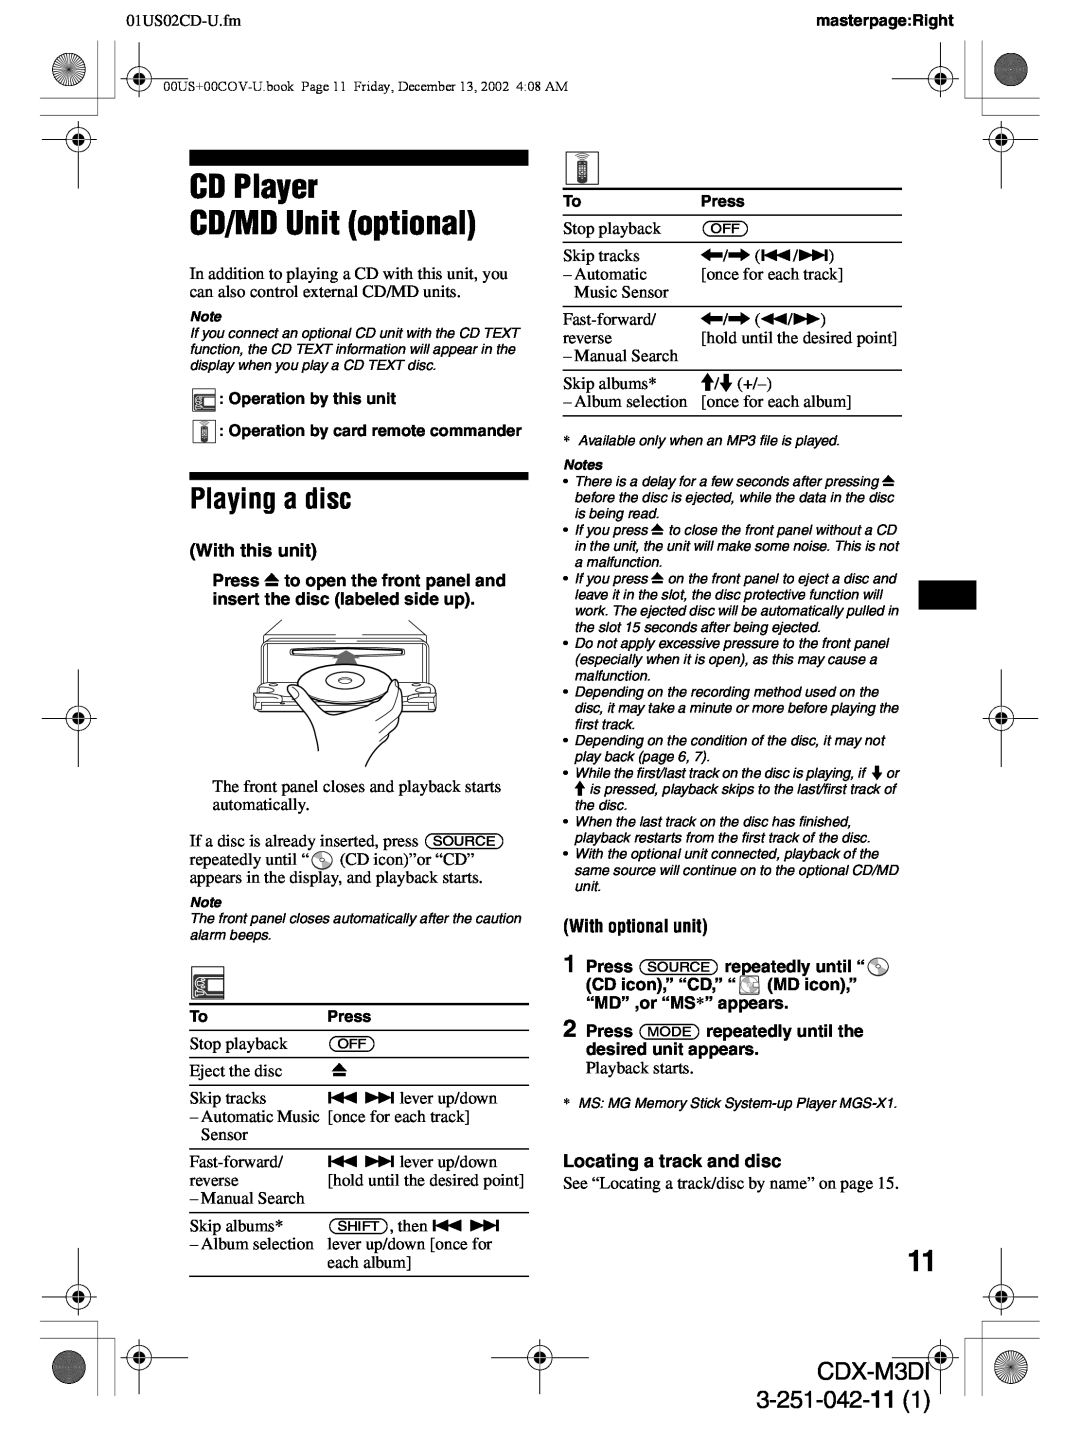 Sony CDX-M3DI operating instructions CD Player CD/MD Unit optional, Playing a disc, 3-251-042-11, 01US02CD-U.fm 